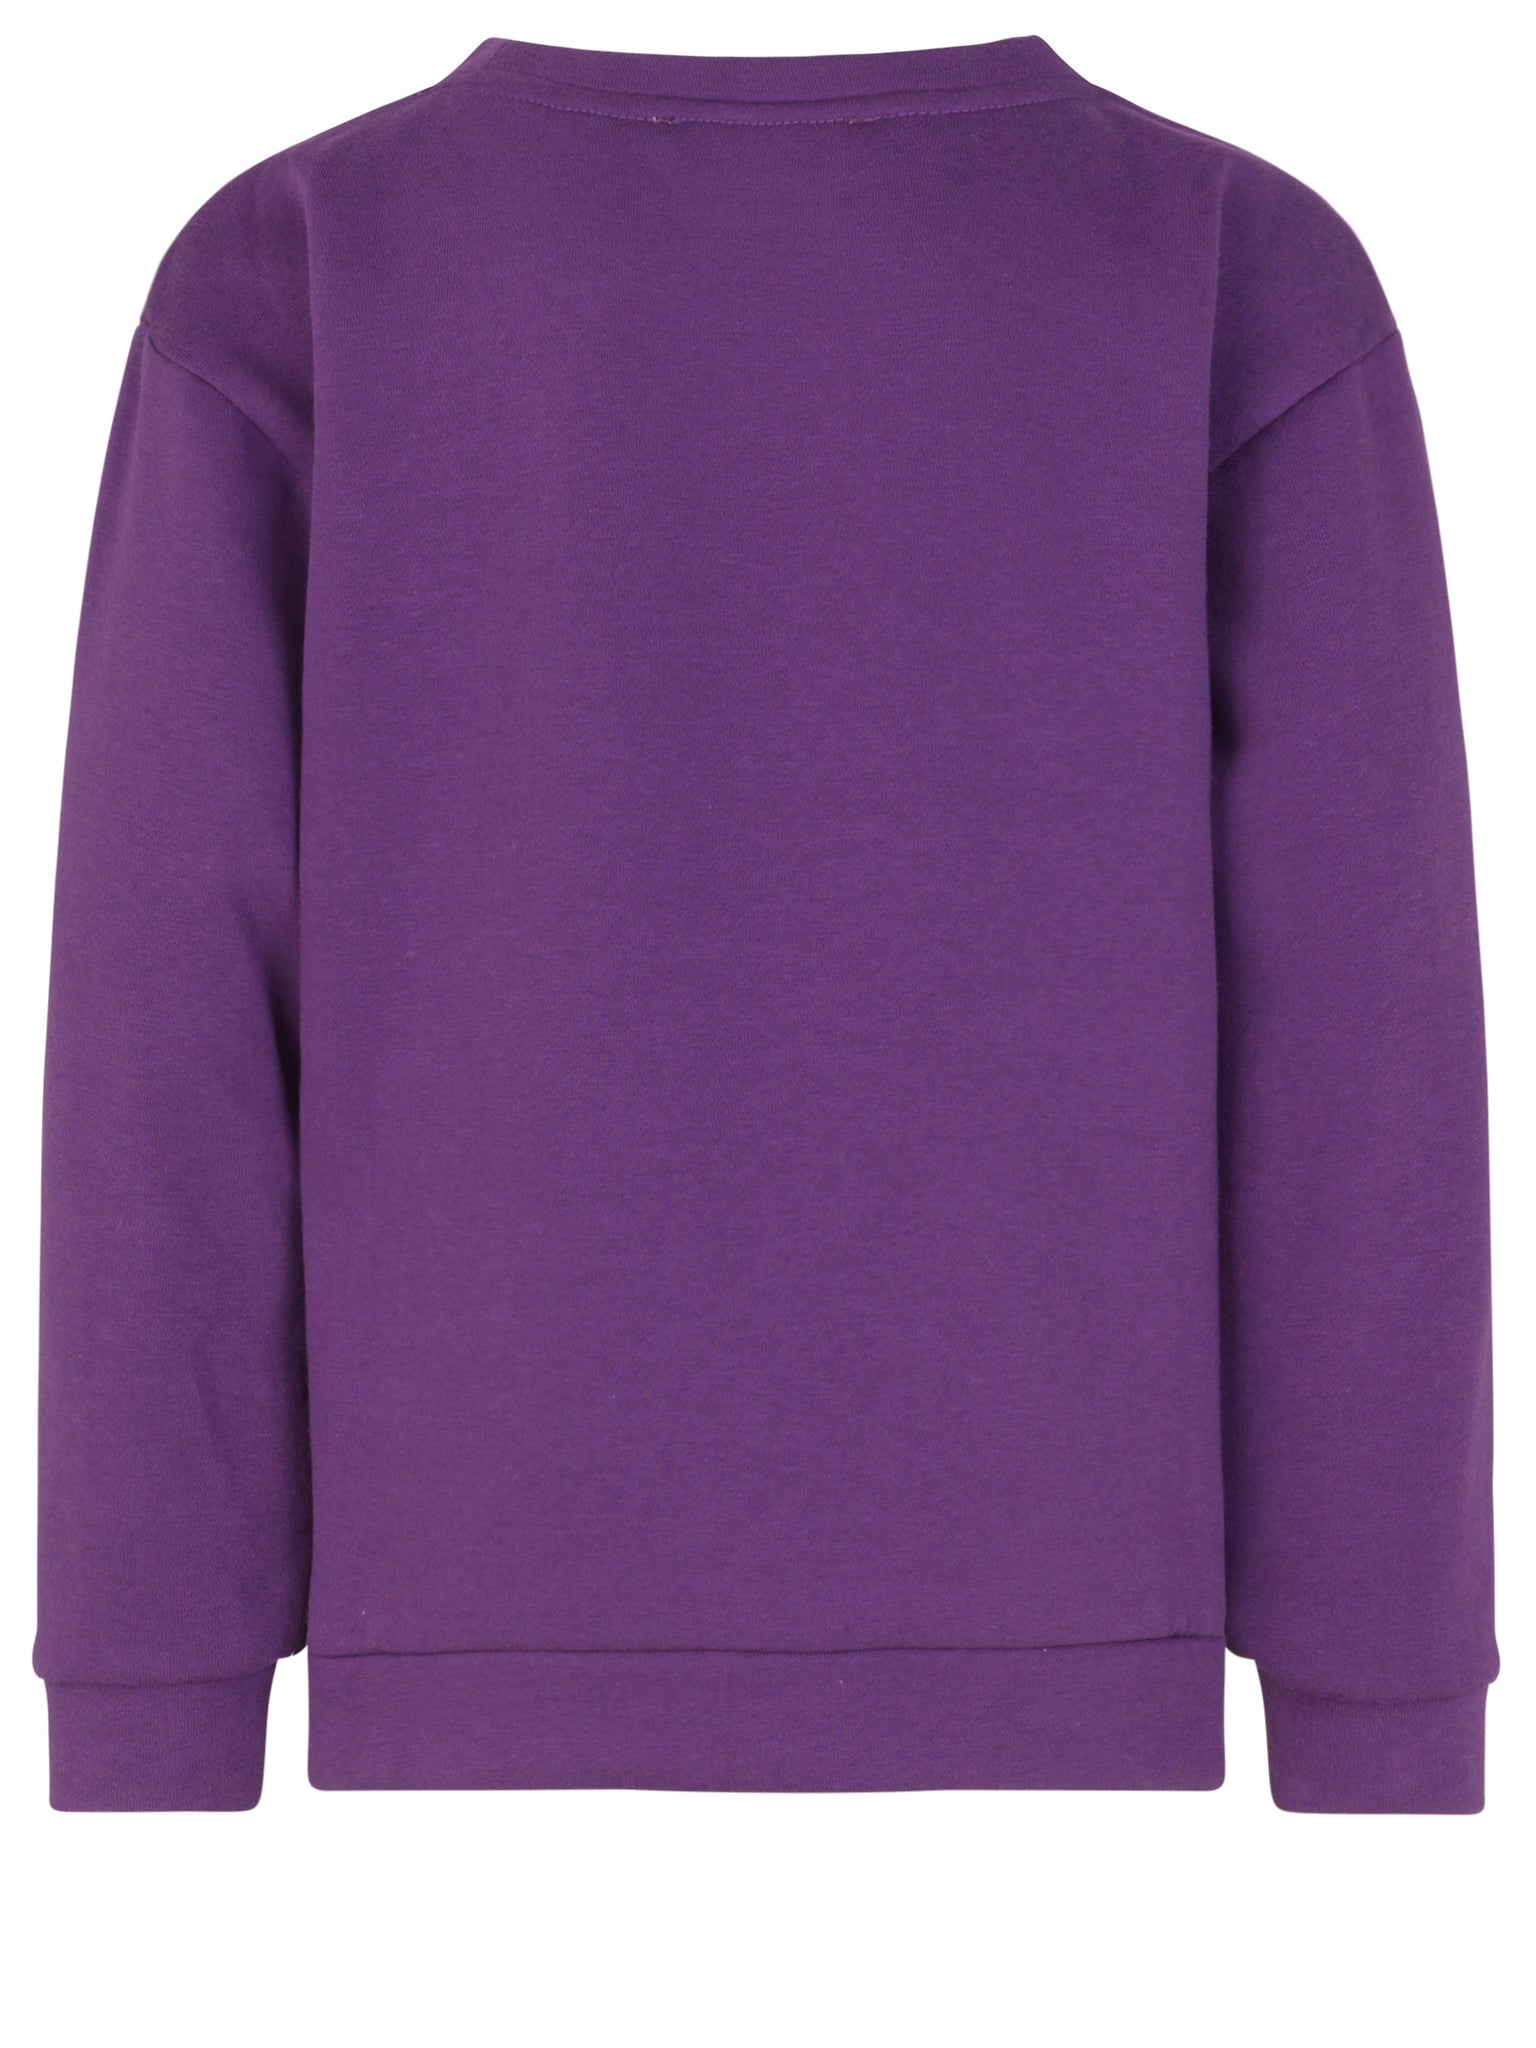 Sweatshirt for girls